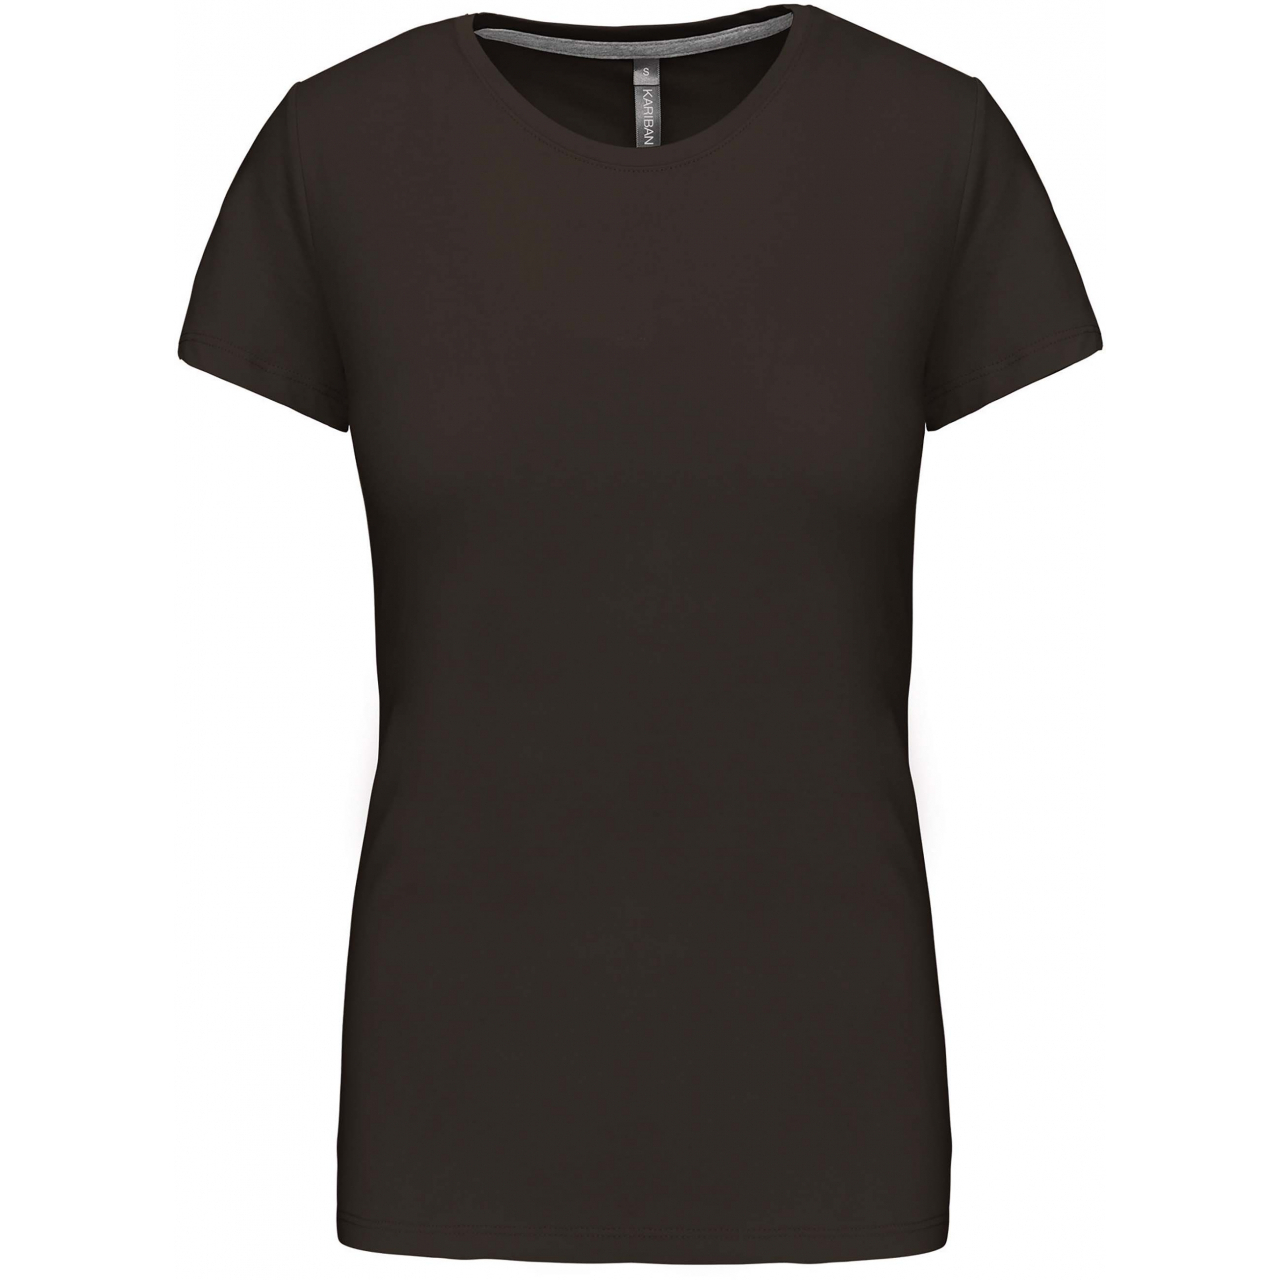 Dámské tričko Kariban s krátkým rukávem - tmavé khaki, L